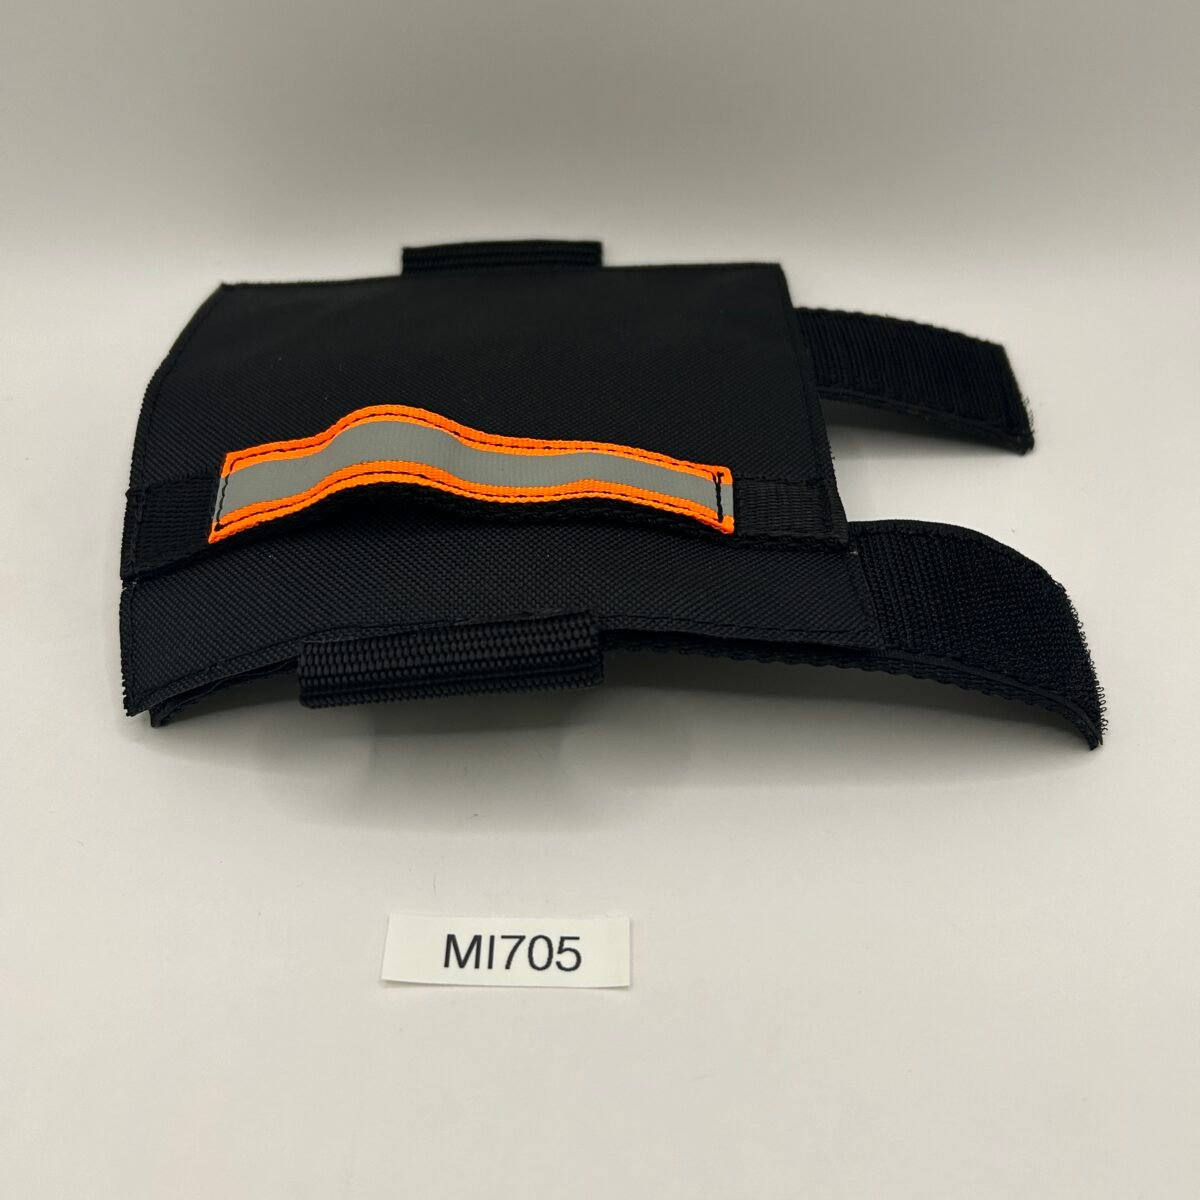 MI705 MosterEFI Fabric battery holder